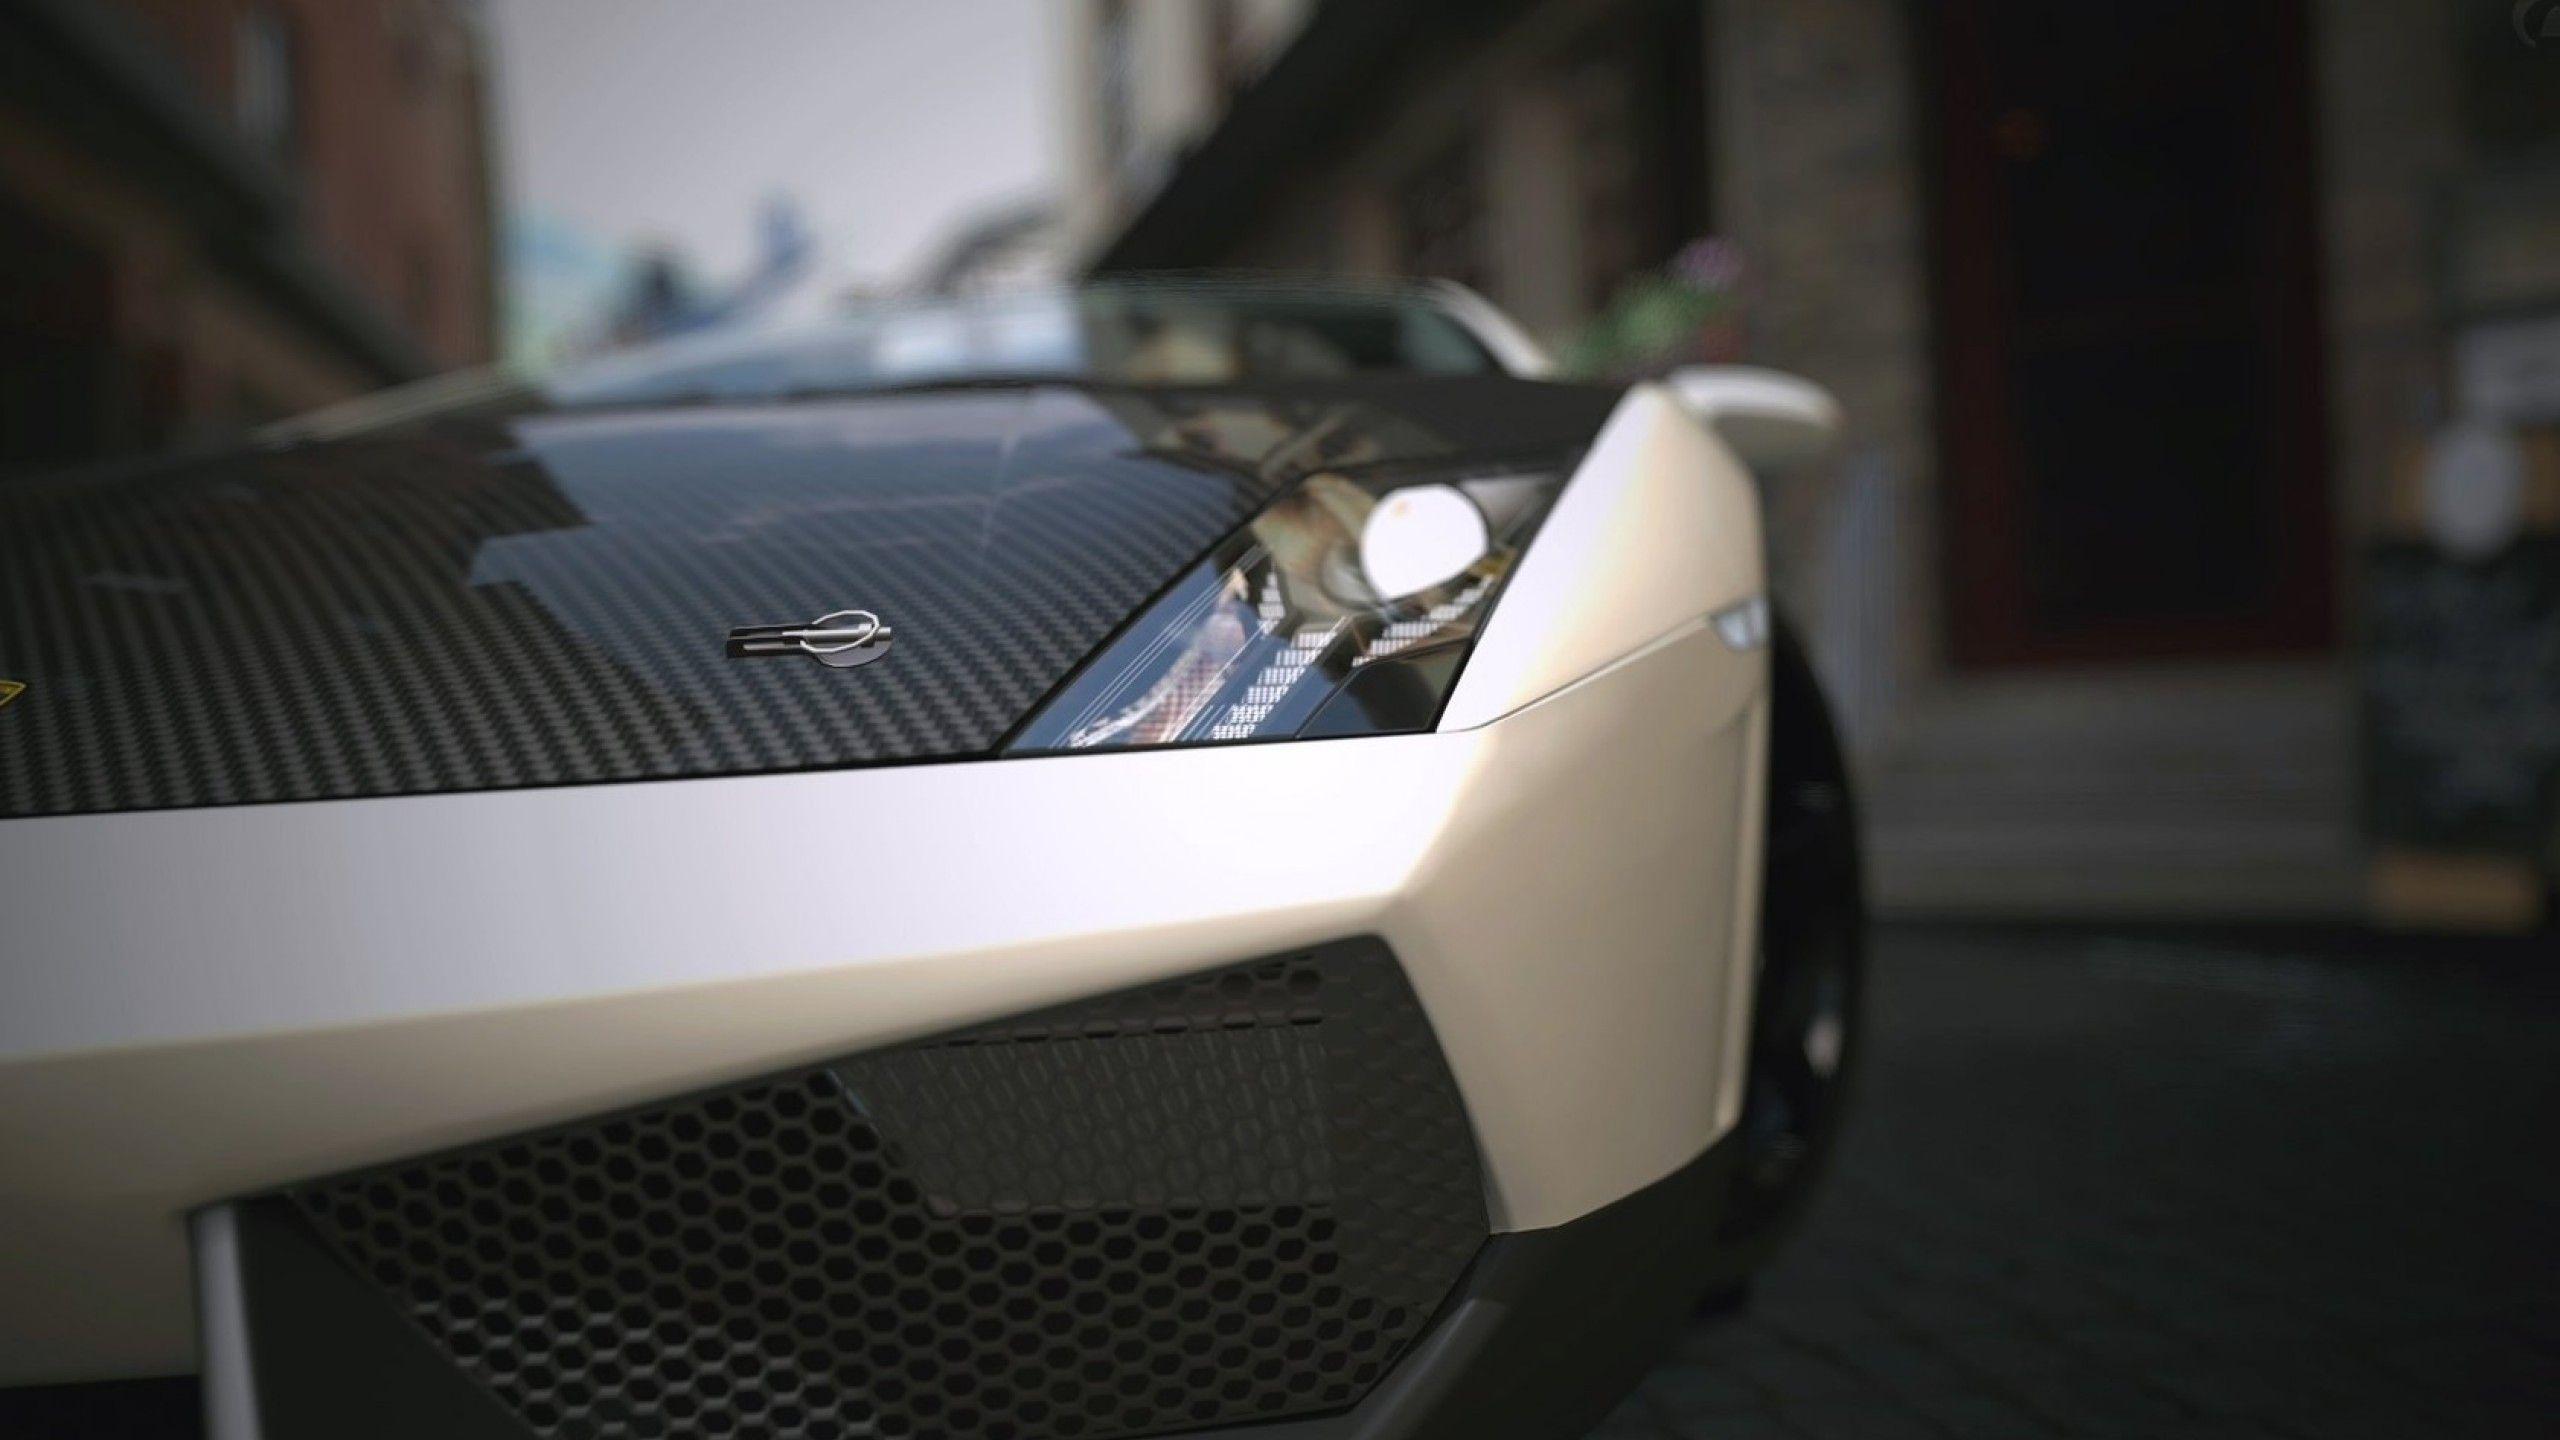 Lamborghini Front View Matte, HD Cars, 4k Wallpaper, Image